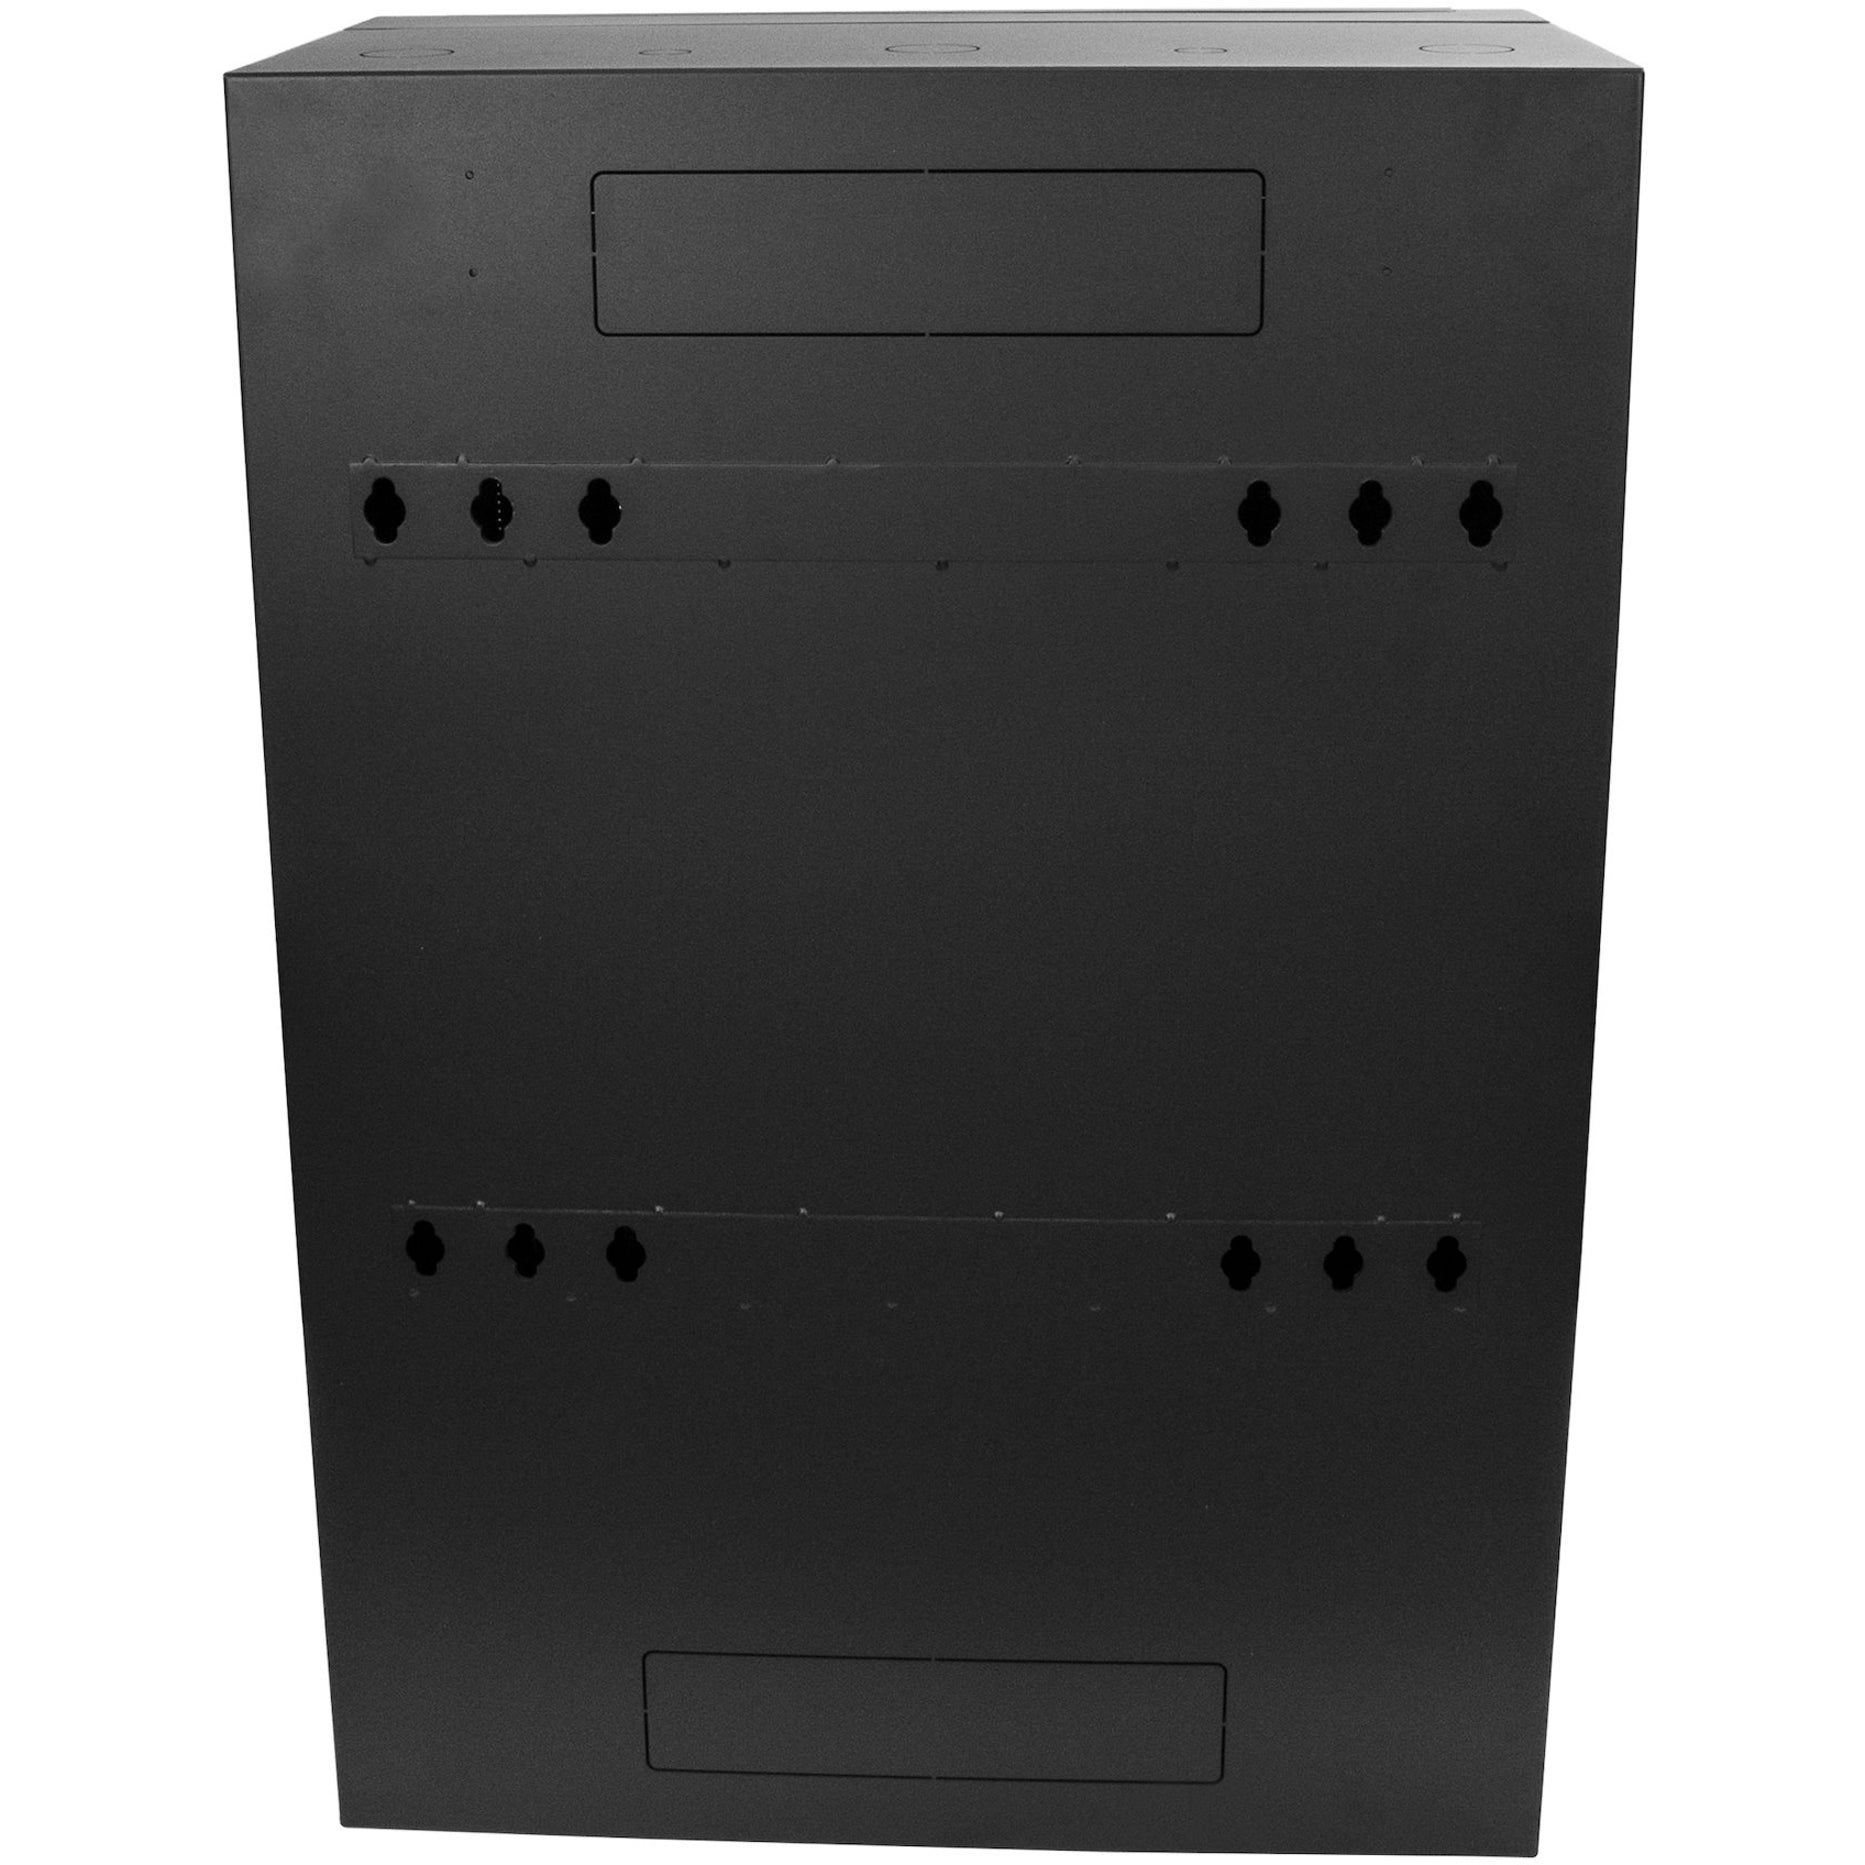 StarTech.com RK630WALVS 6U Vertical Server Cabinet - Wall Mount Network Cabinet, 30 in. Depth